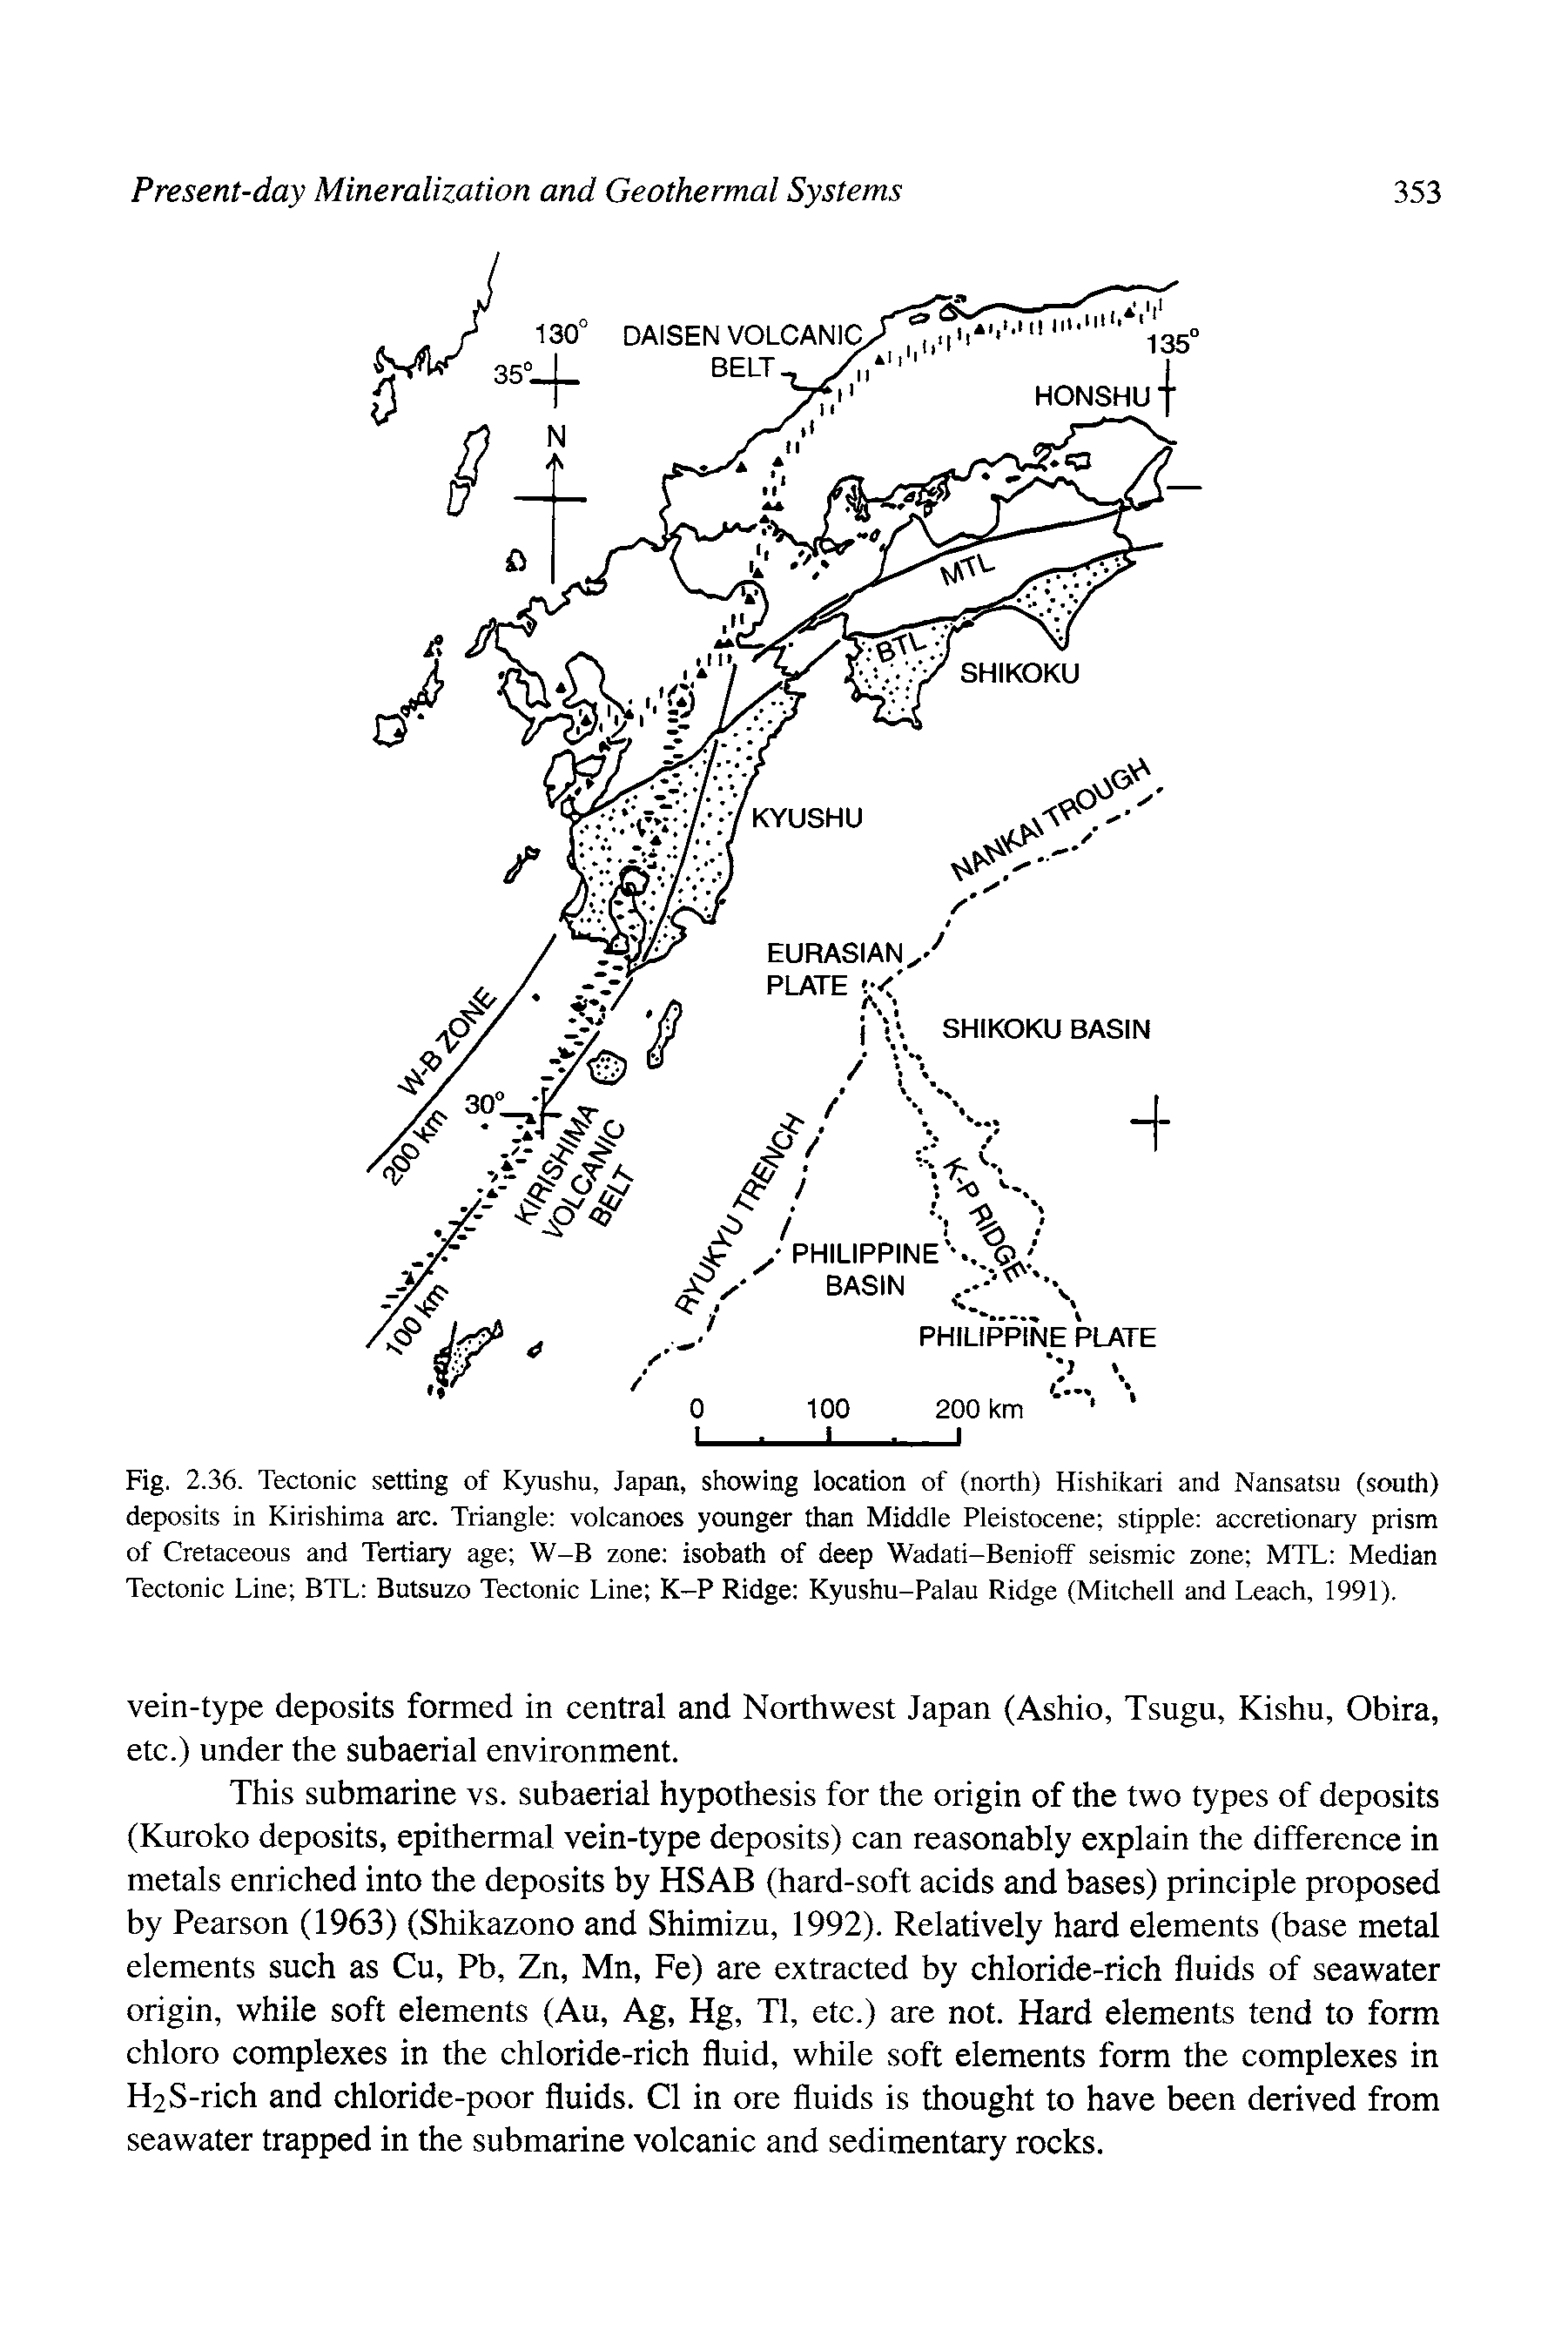 Fig. 2.36. Tectonic setting of Kyushu, Japan, showing location of (north) Hishikari and Nansatsu (south) deposits in Kirishima arc. Triangle volcanoes younger than Middle Pleistocene stipple accretionary prism of Cretaceous and Tertiary age W-B zone isobath of deep Wadati-Benioff seismic zone MTL Median Tectonic Line BTL Butsuzo Tectonic Line K-P Ridge Kyushu-Palau Ridge (Mitchell and Leach, 1991).